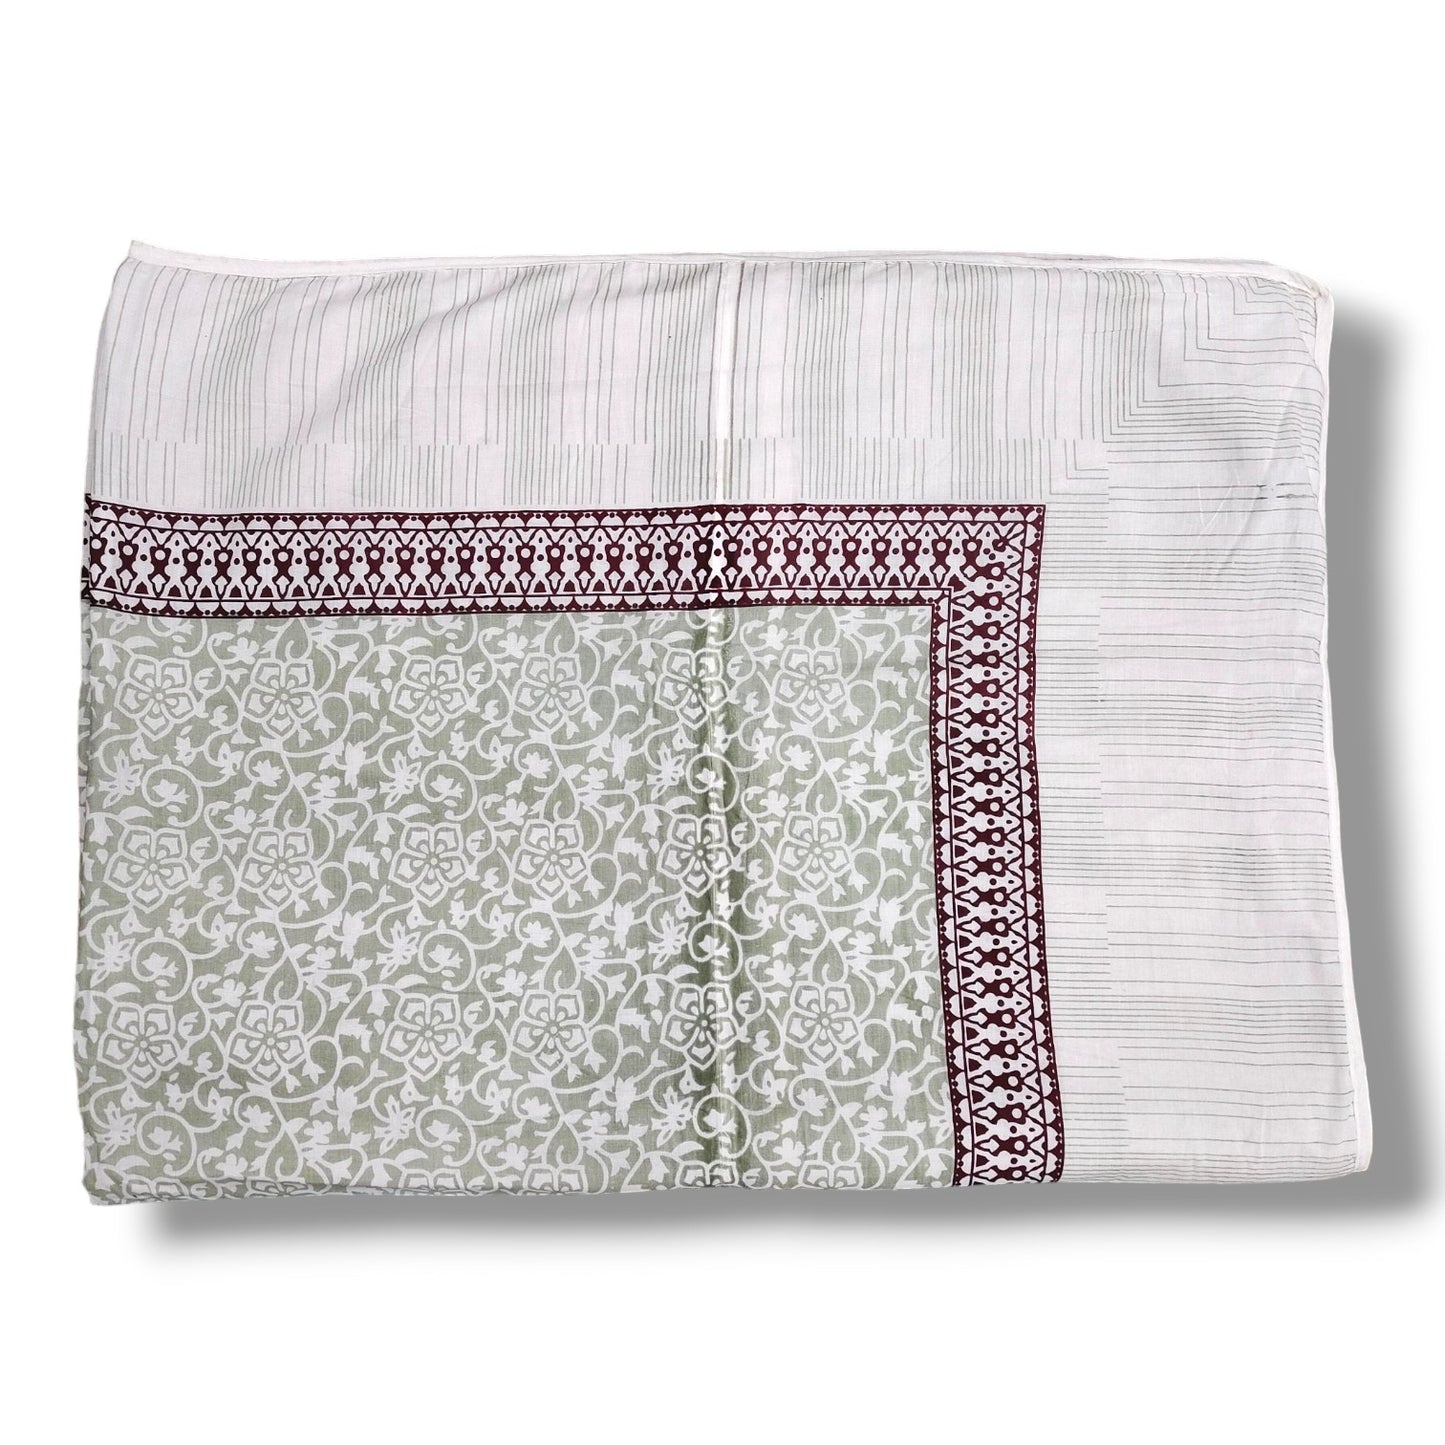 Malmal AC Quilt/Dohar-Floral green -Single Bed